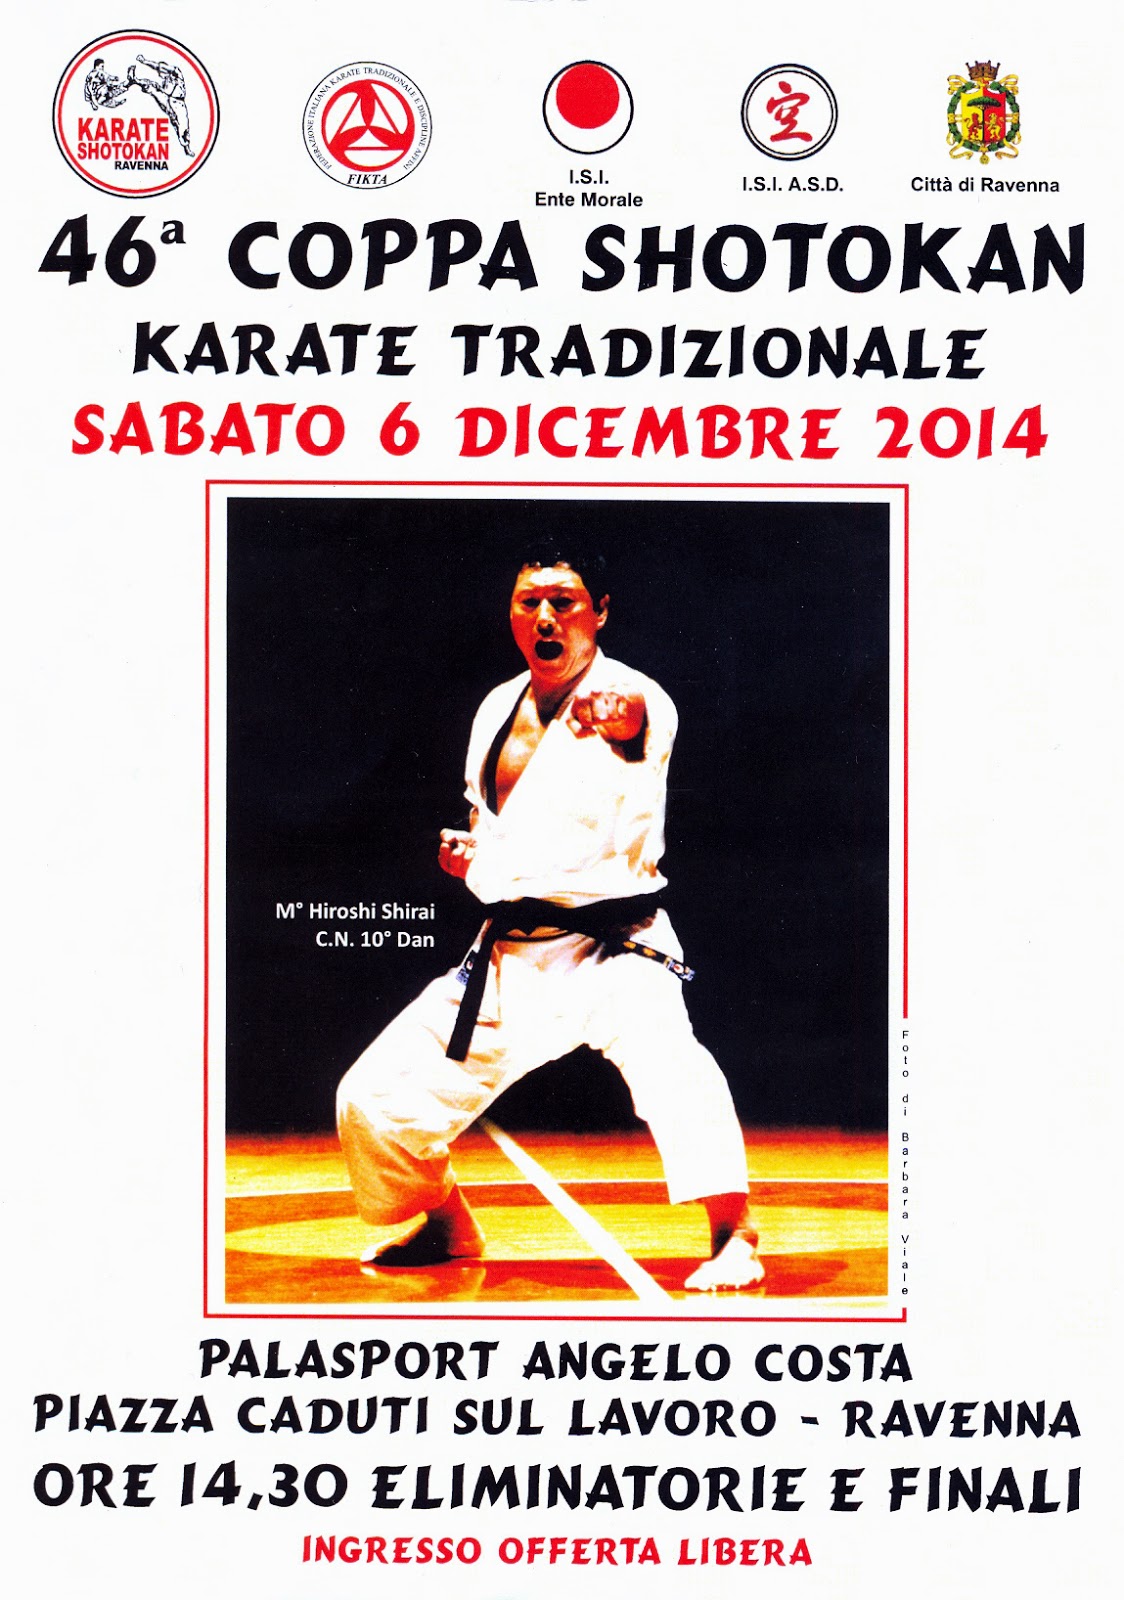 Shotokan Karate Club Ravenna: novembre 2014